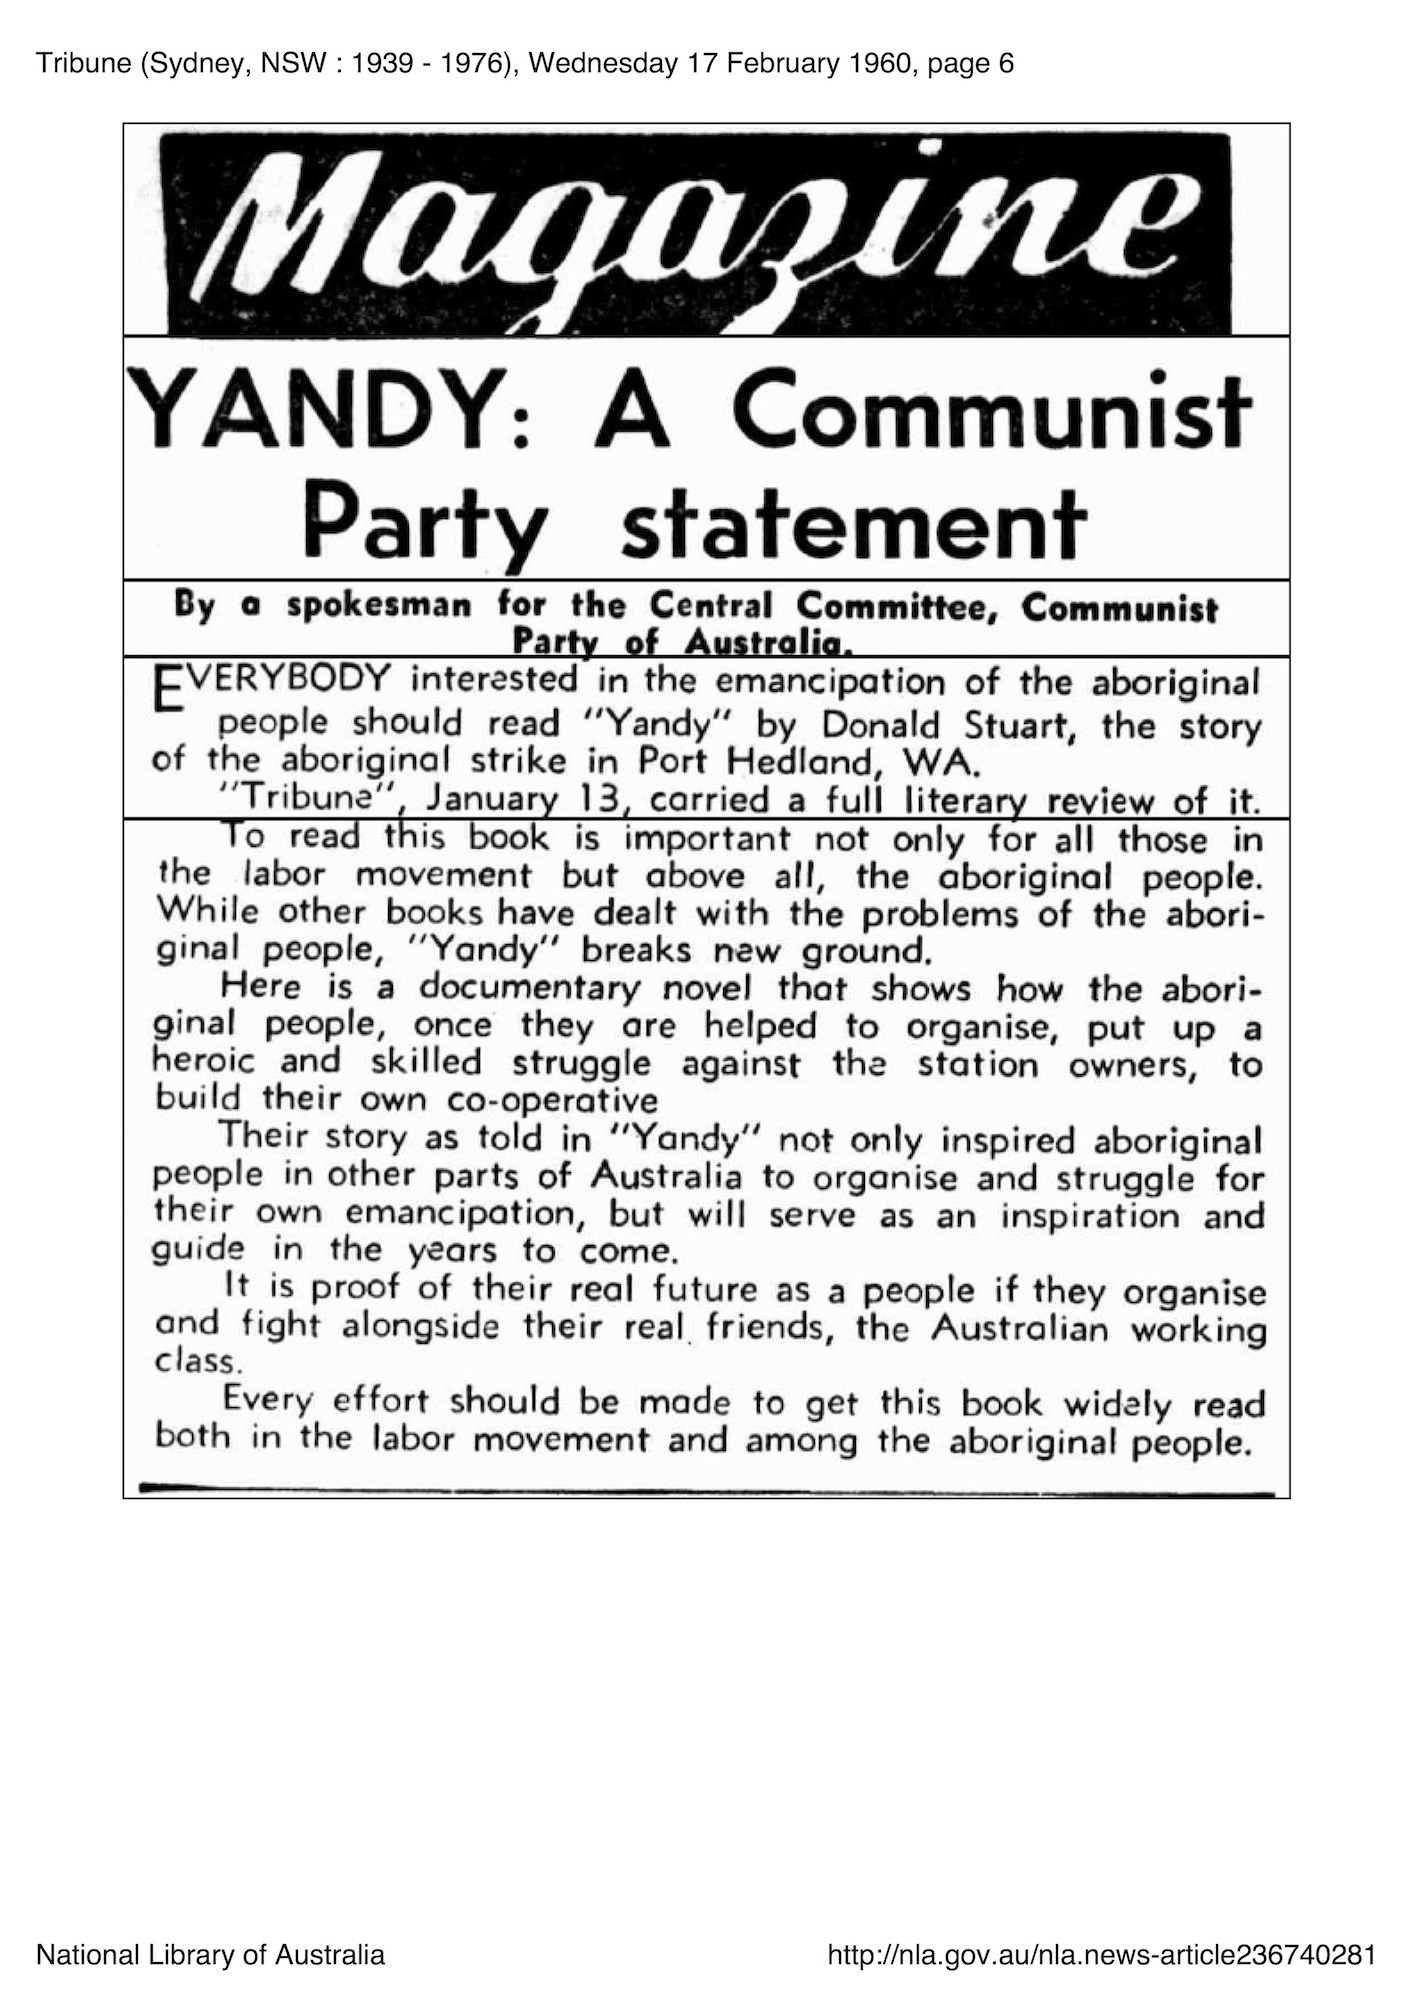 Tribune, 17 February 1960, p. 6, ‘Yandy: A Communist Party Statement’